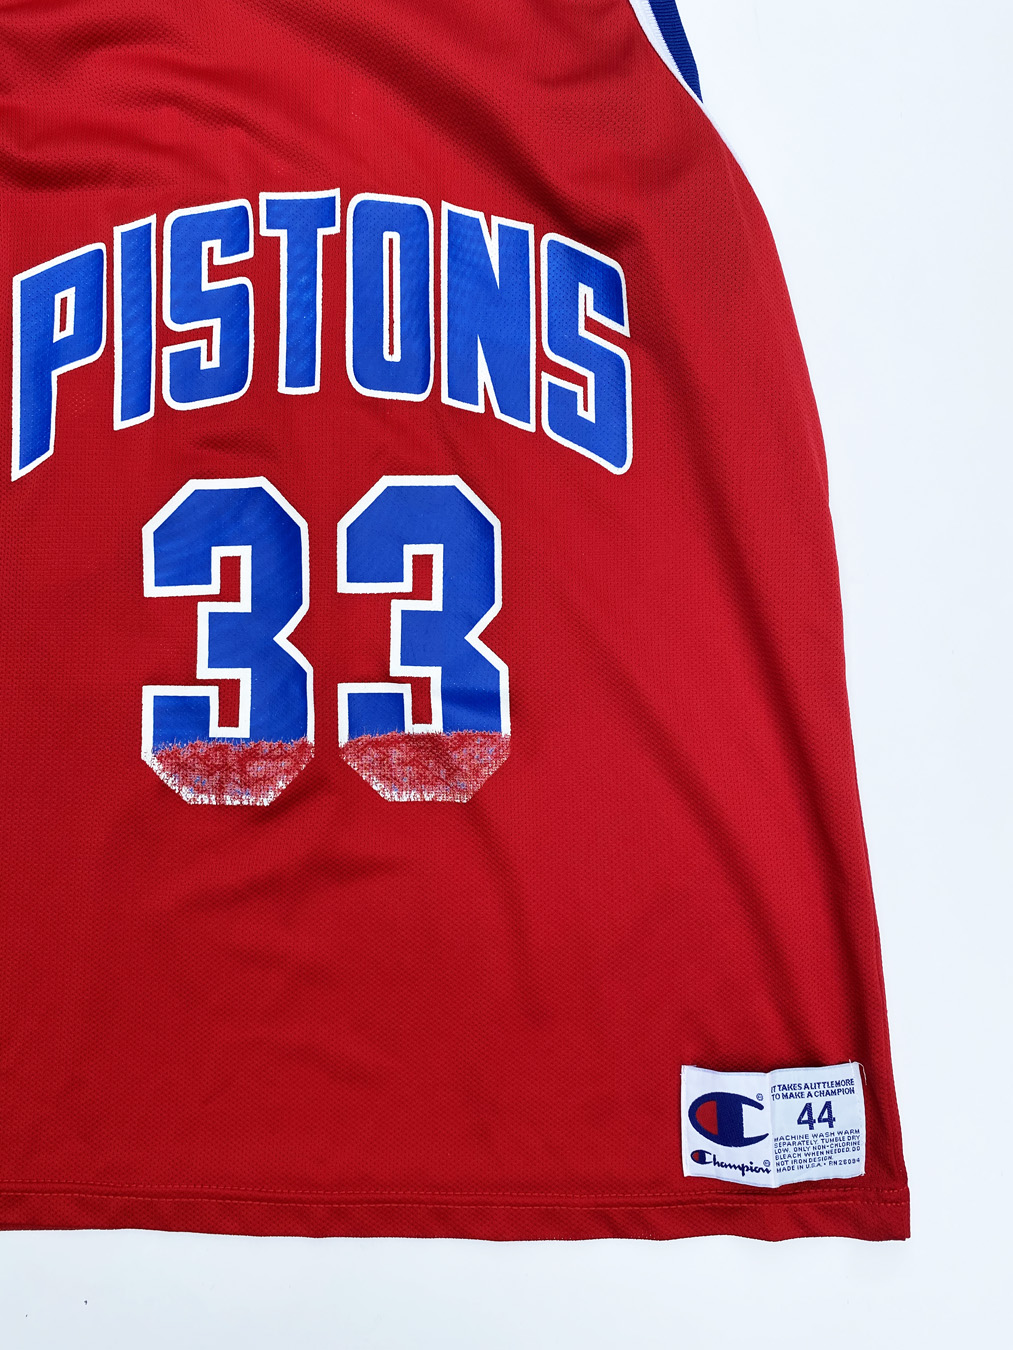 90's Grant Hill Detroit Pistons Champion Authentic NBA Jersey Size